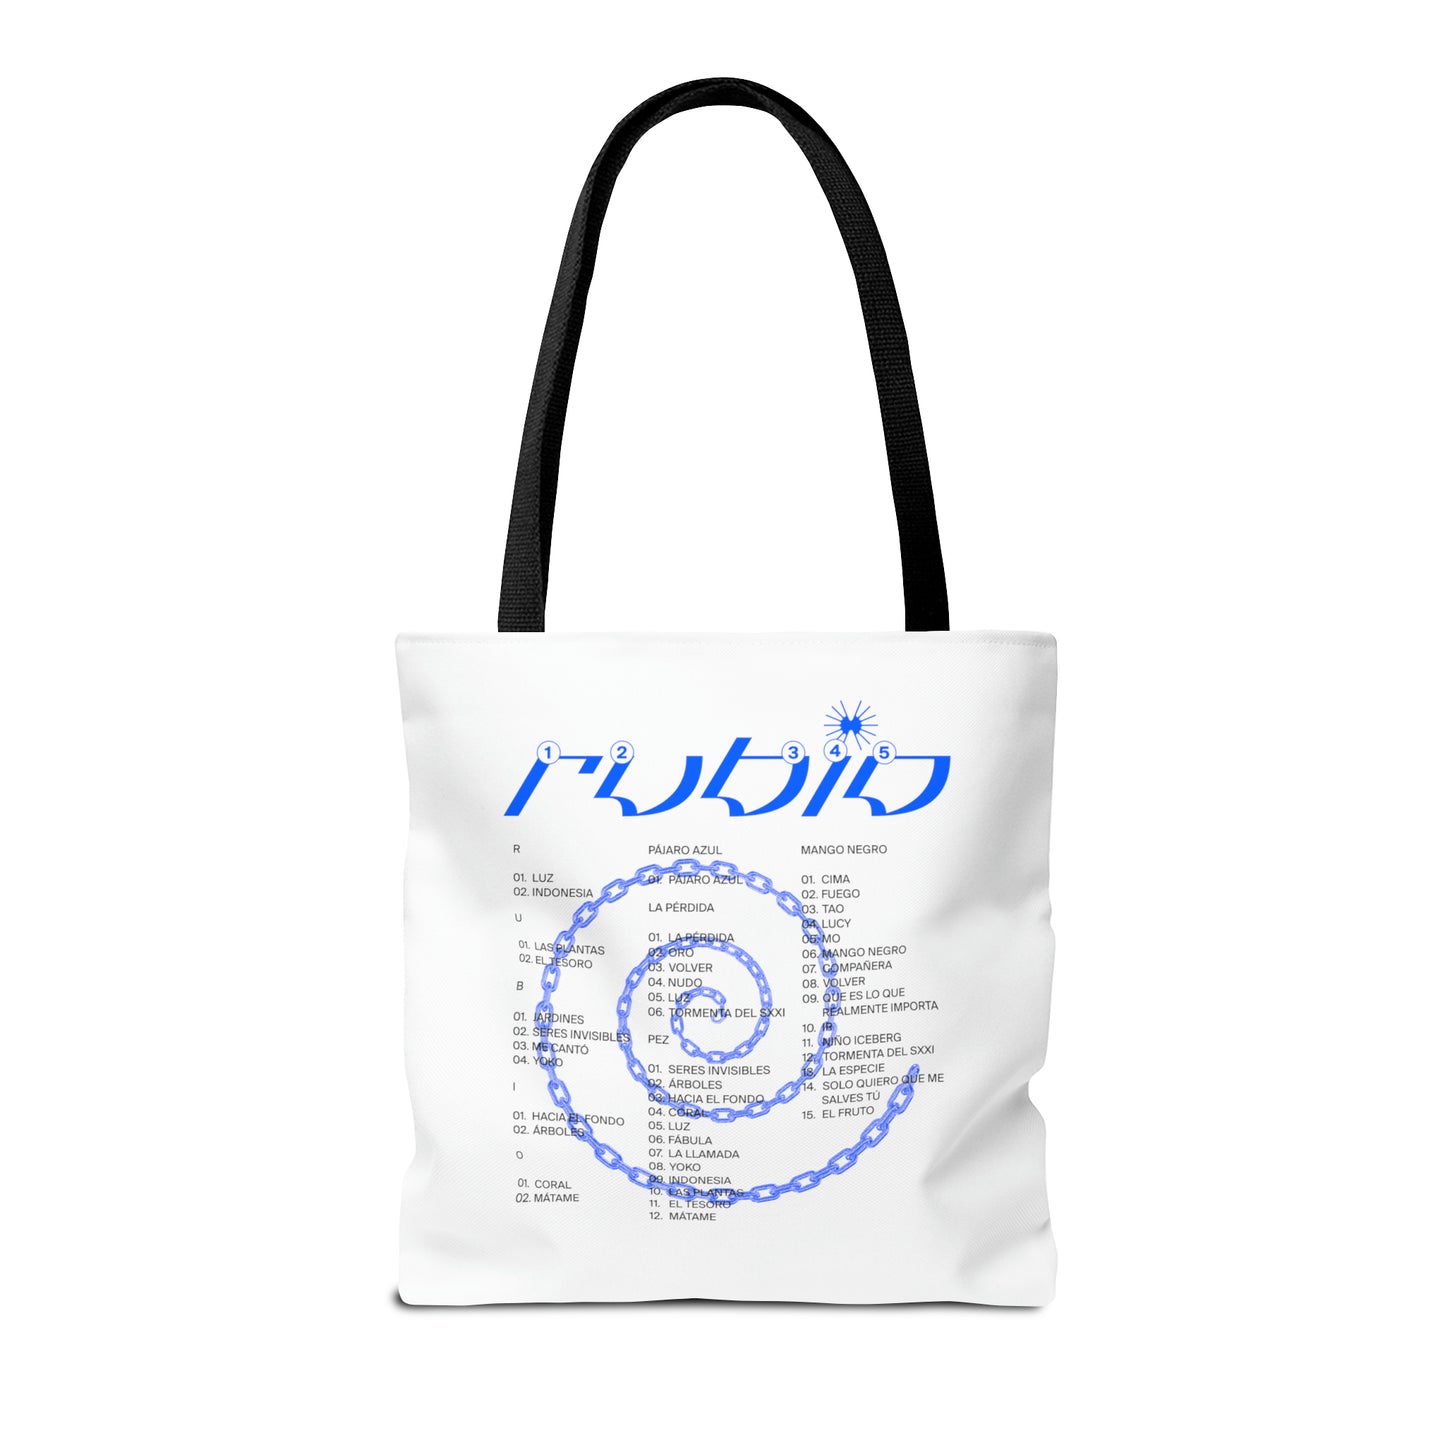 RUBIO's Albums & Tracks White Tote Bag